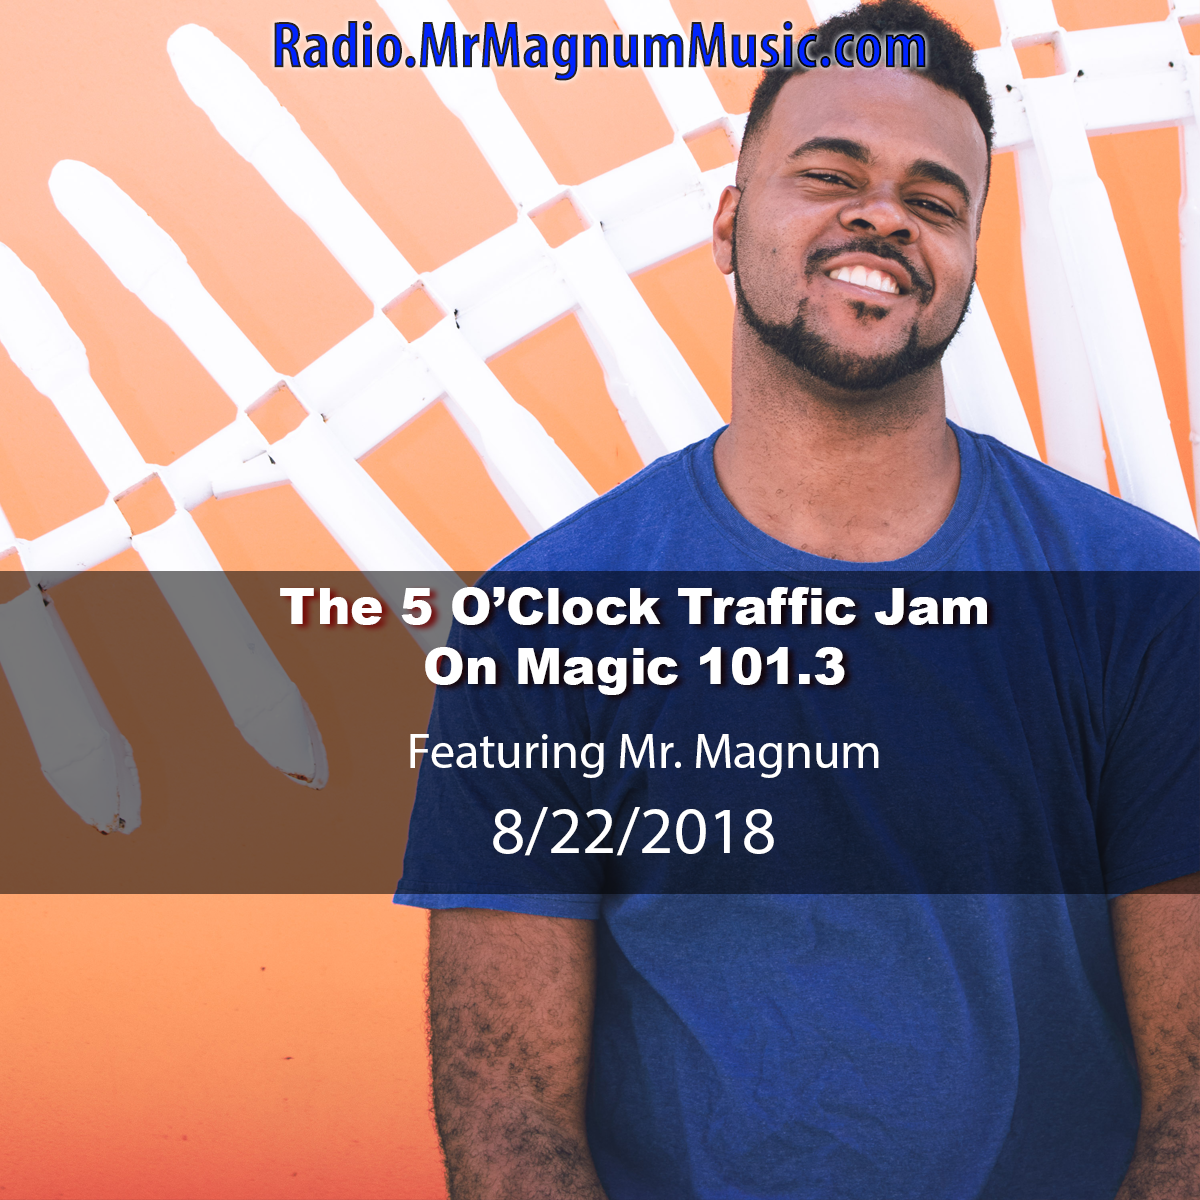 The 5 O'Clock Traffic Jam 20180822 featuring Gainesville's #1 DJ, Mr. Magnum on Magic 101.3